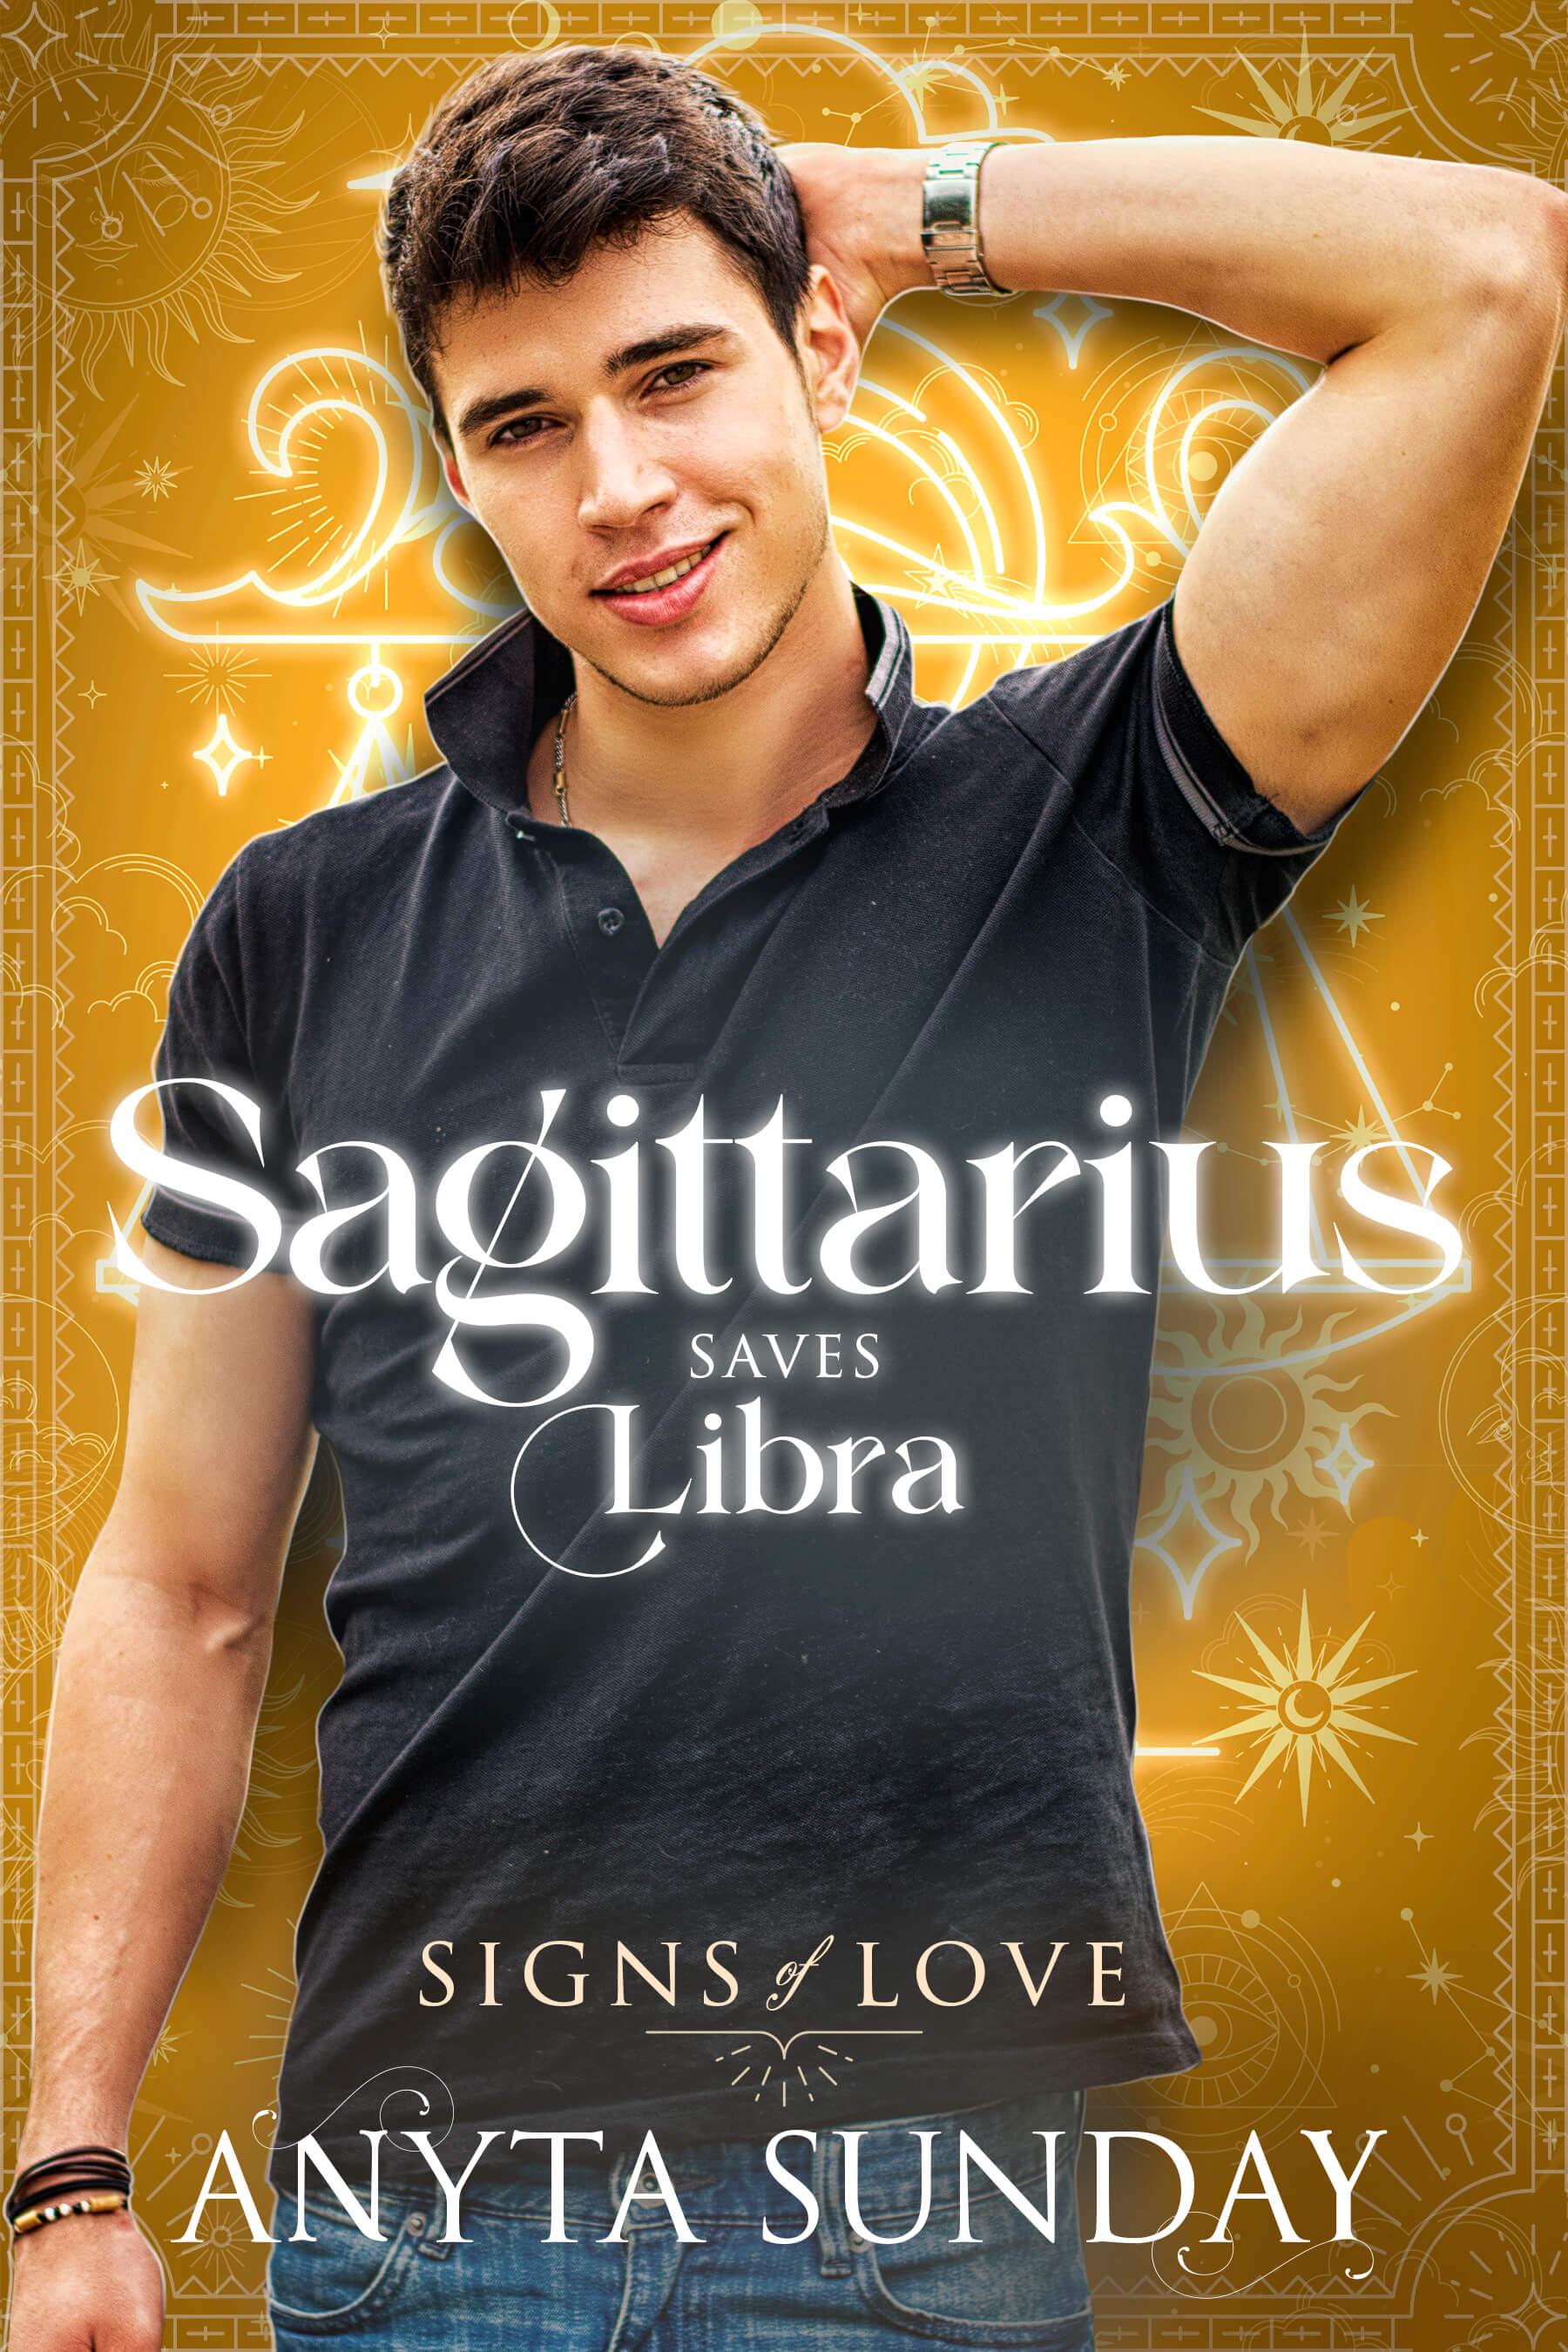 Sagittarius Saves Libra Cover Image - Gay Romance by Anyta Sunday